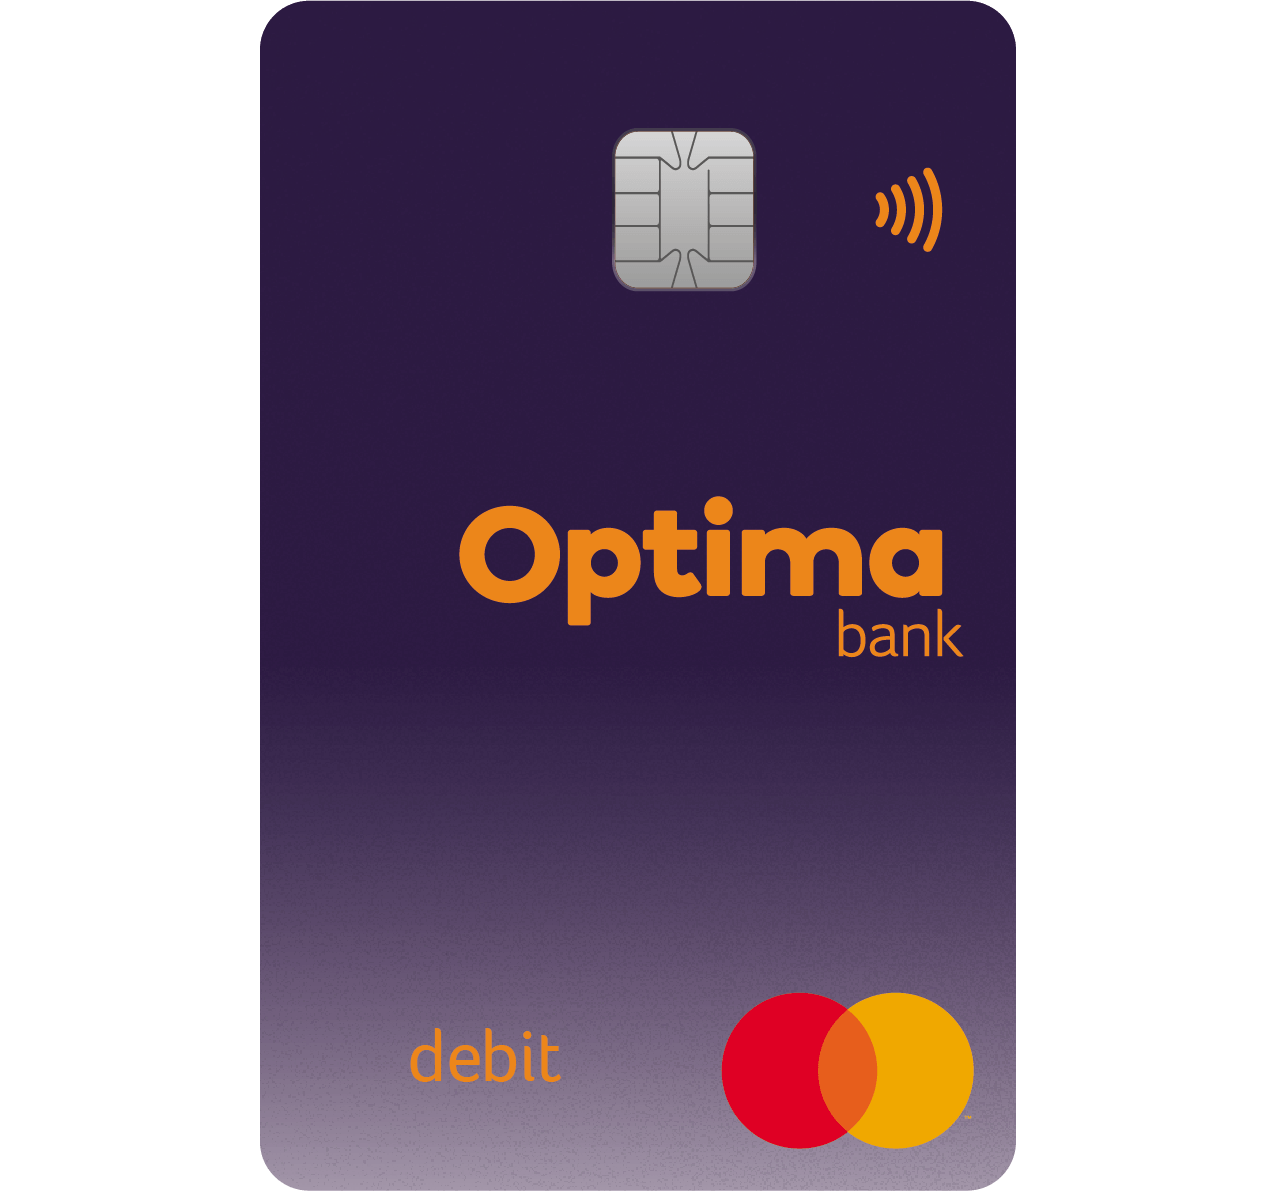 OPTIMA BANK DEBIT CARD 12 05 22300PPI